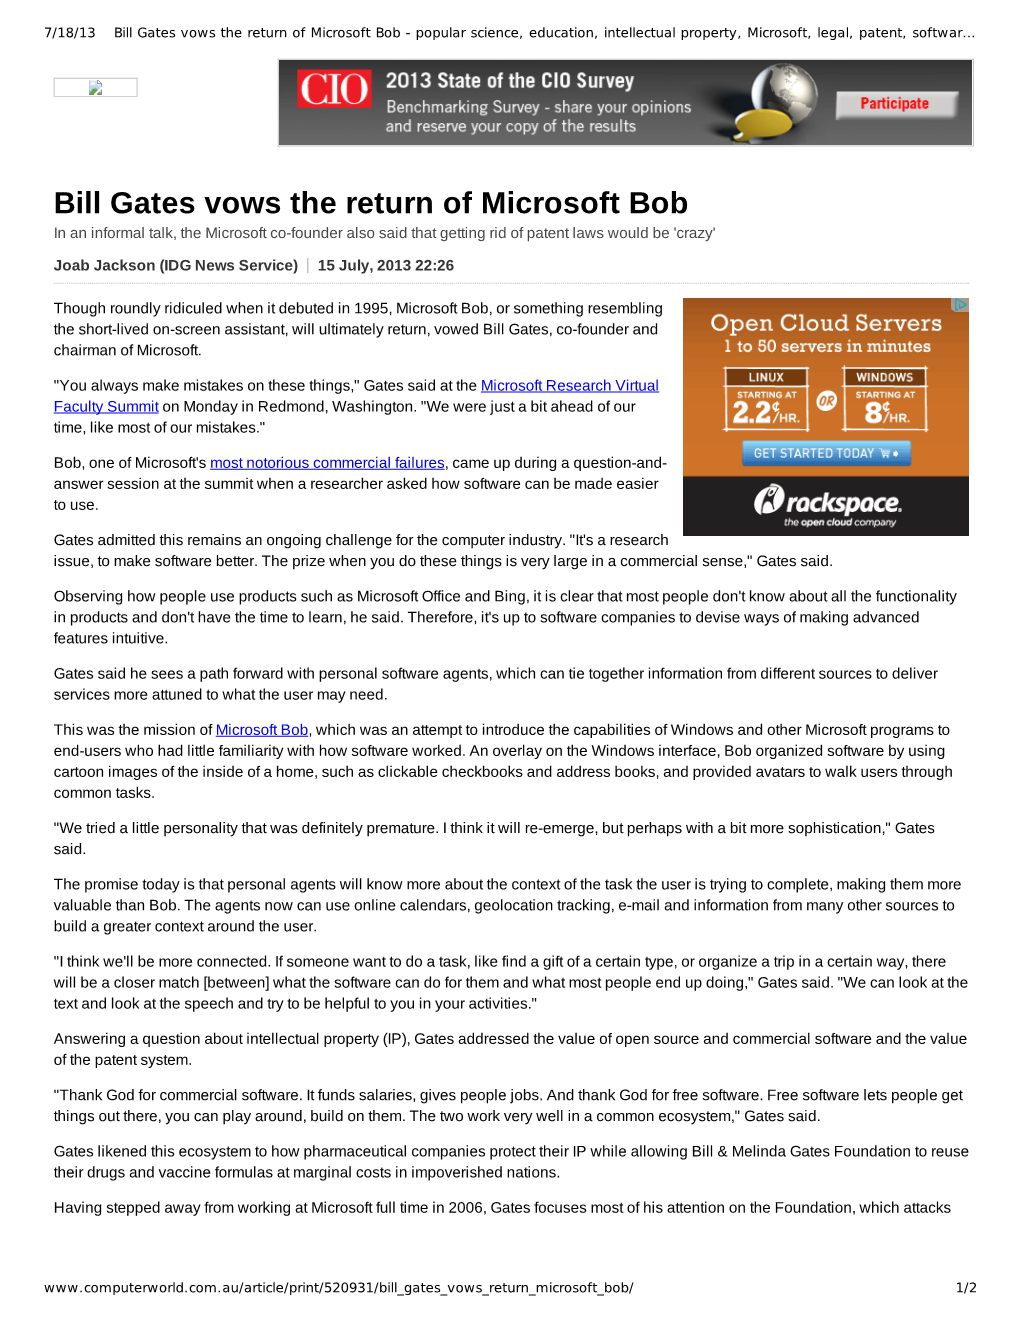 Bill Gates Vows the Return of Microsoft Bob - Popular Science, Education, Intellectual Property, Microsoft, Legal, Patent, Softwar…